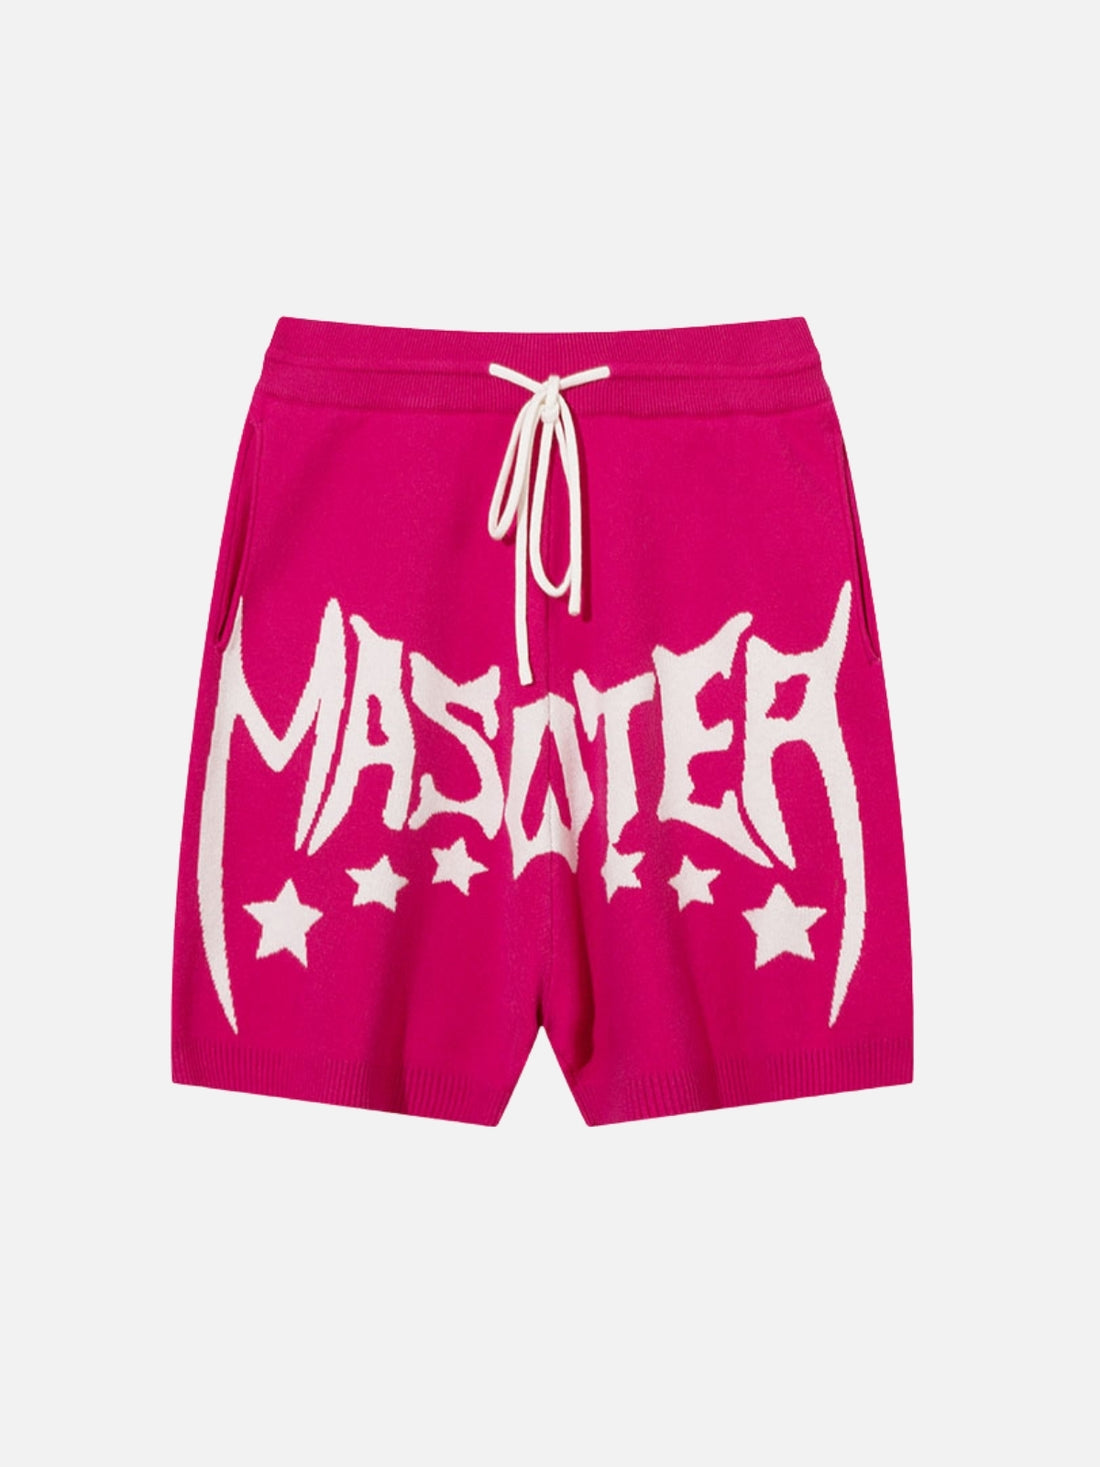 MASOTER - Regular Graphic Shorts Pink | Teenwear.eu